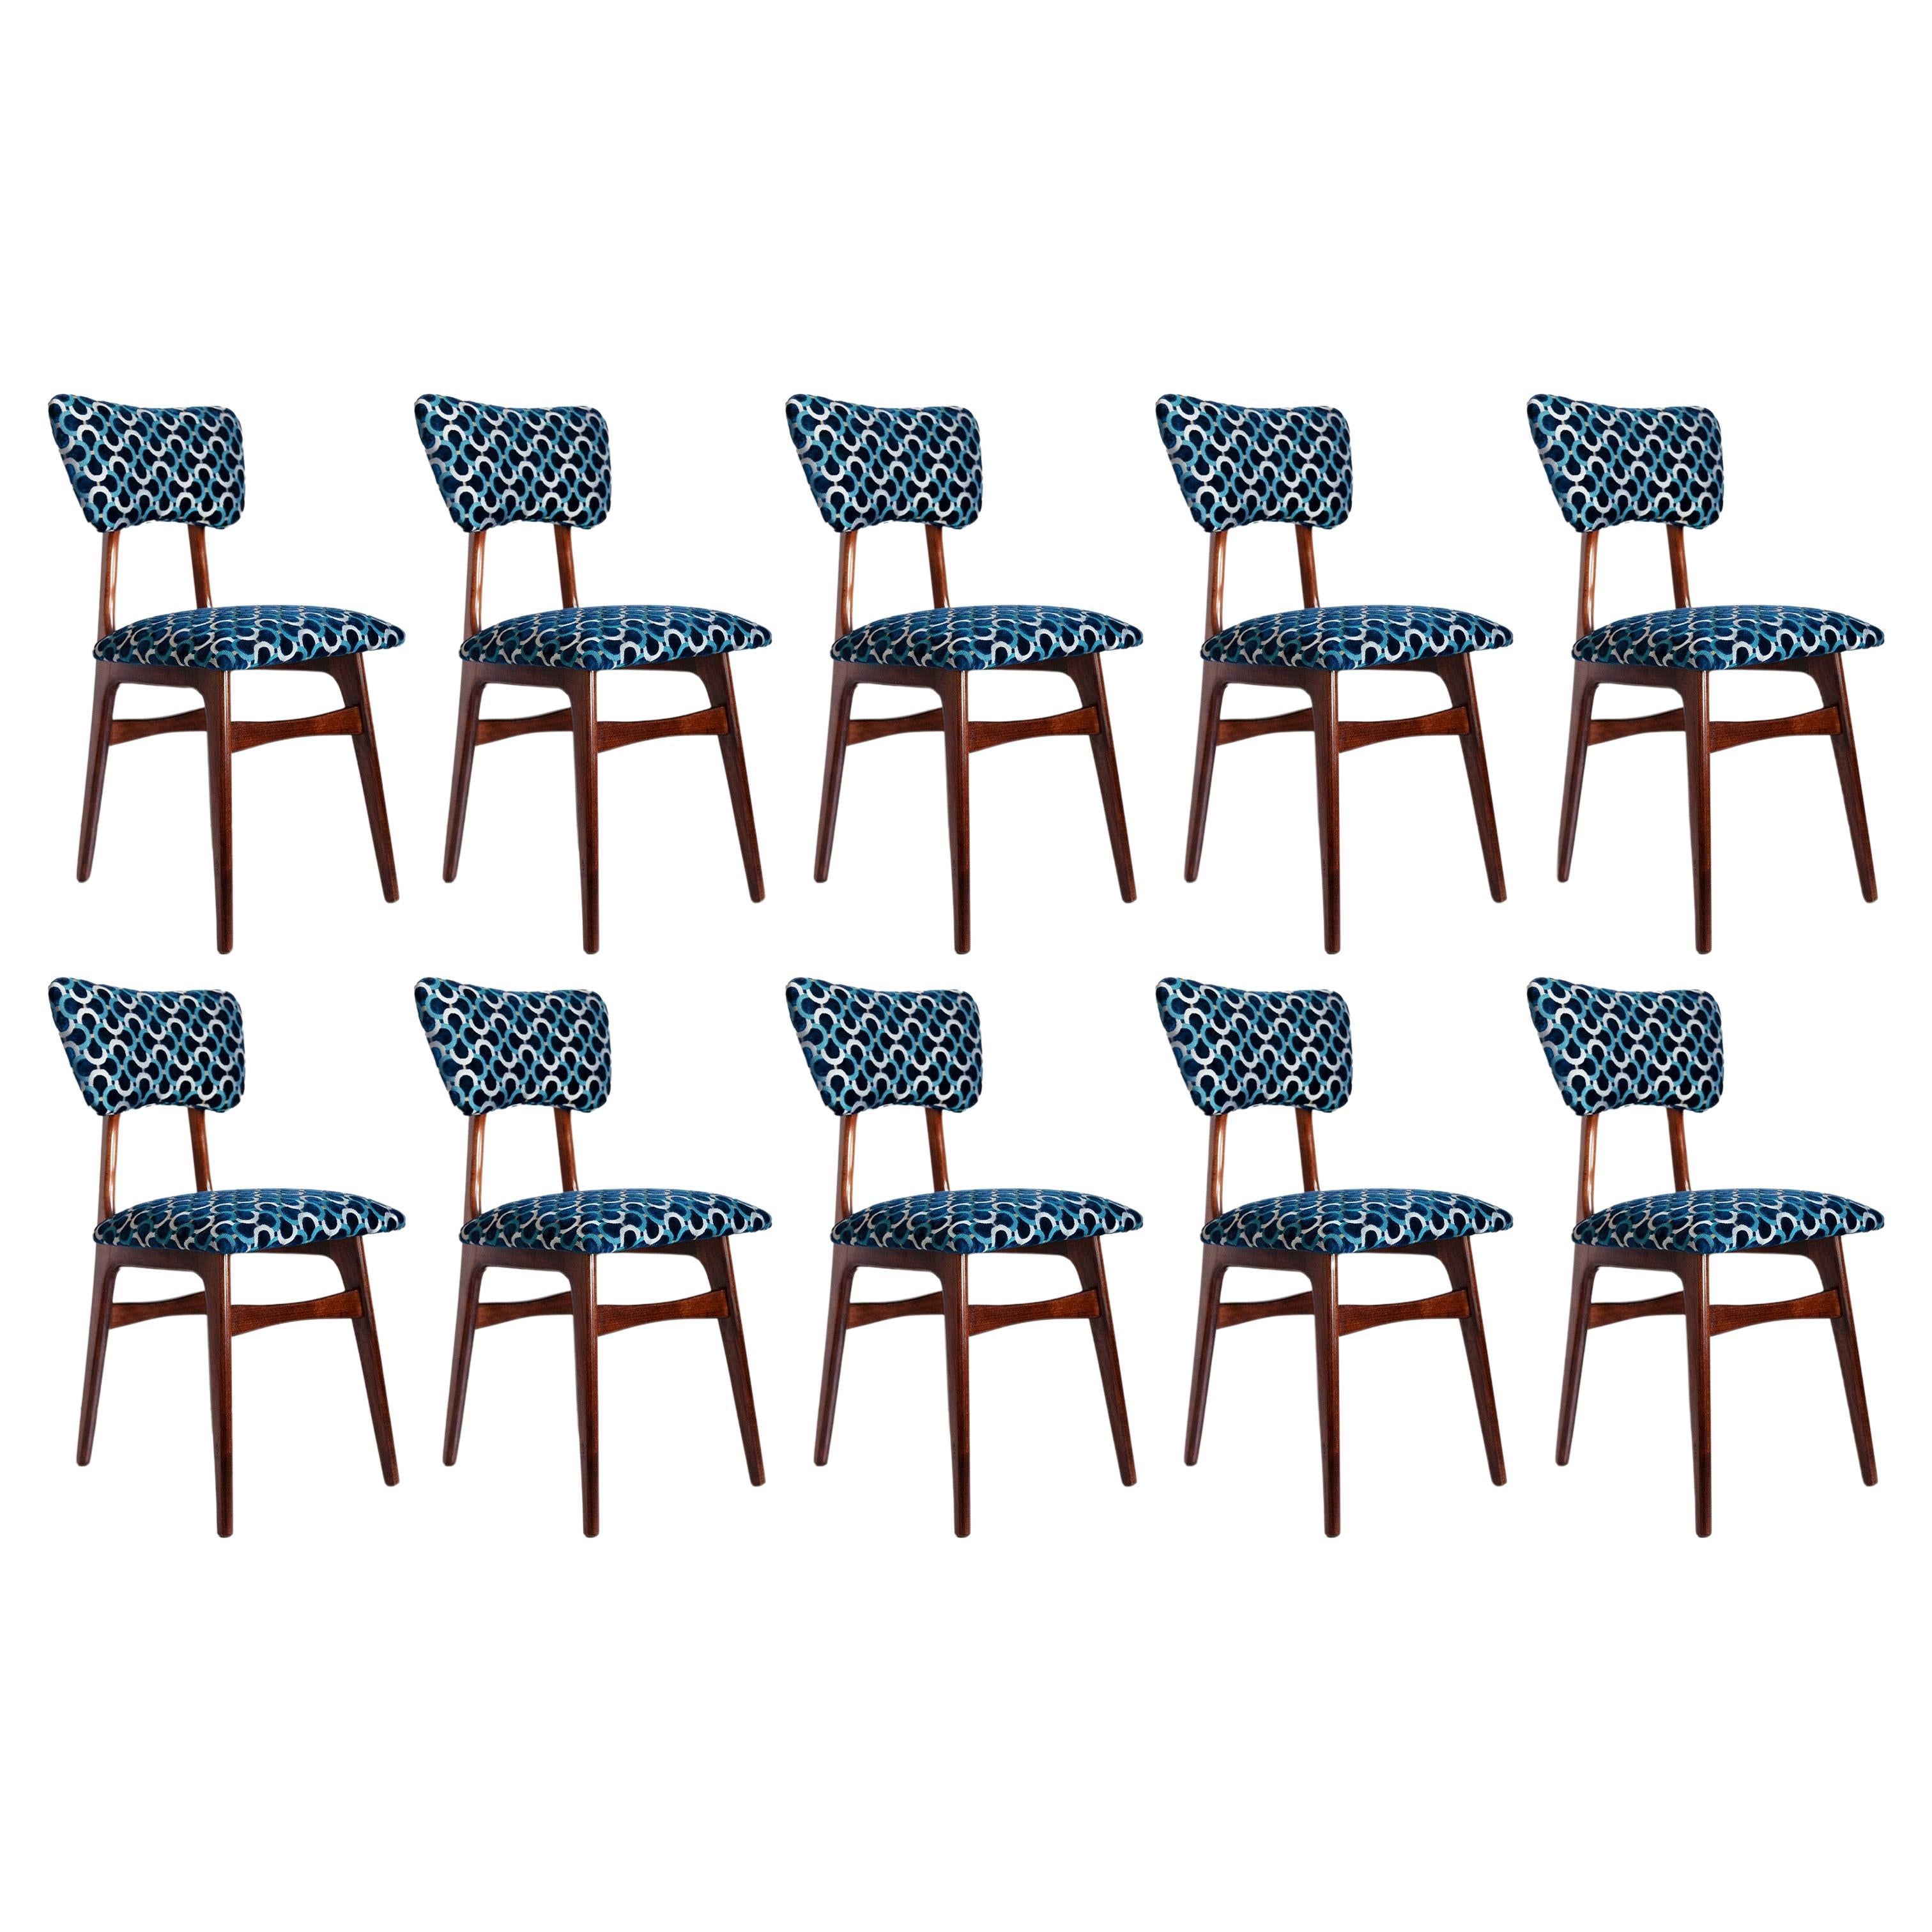 Ten Mid Century Butterfly Chairs, Blue Scarabeo Velvet, Dark Wood, Europe, 1960s For Sale